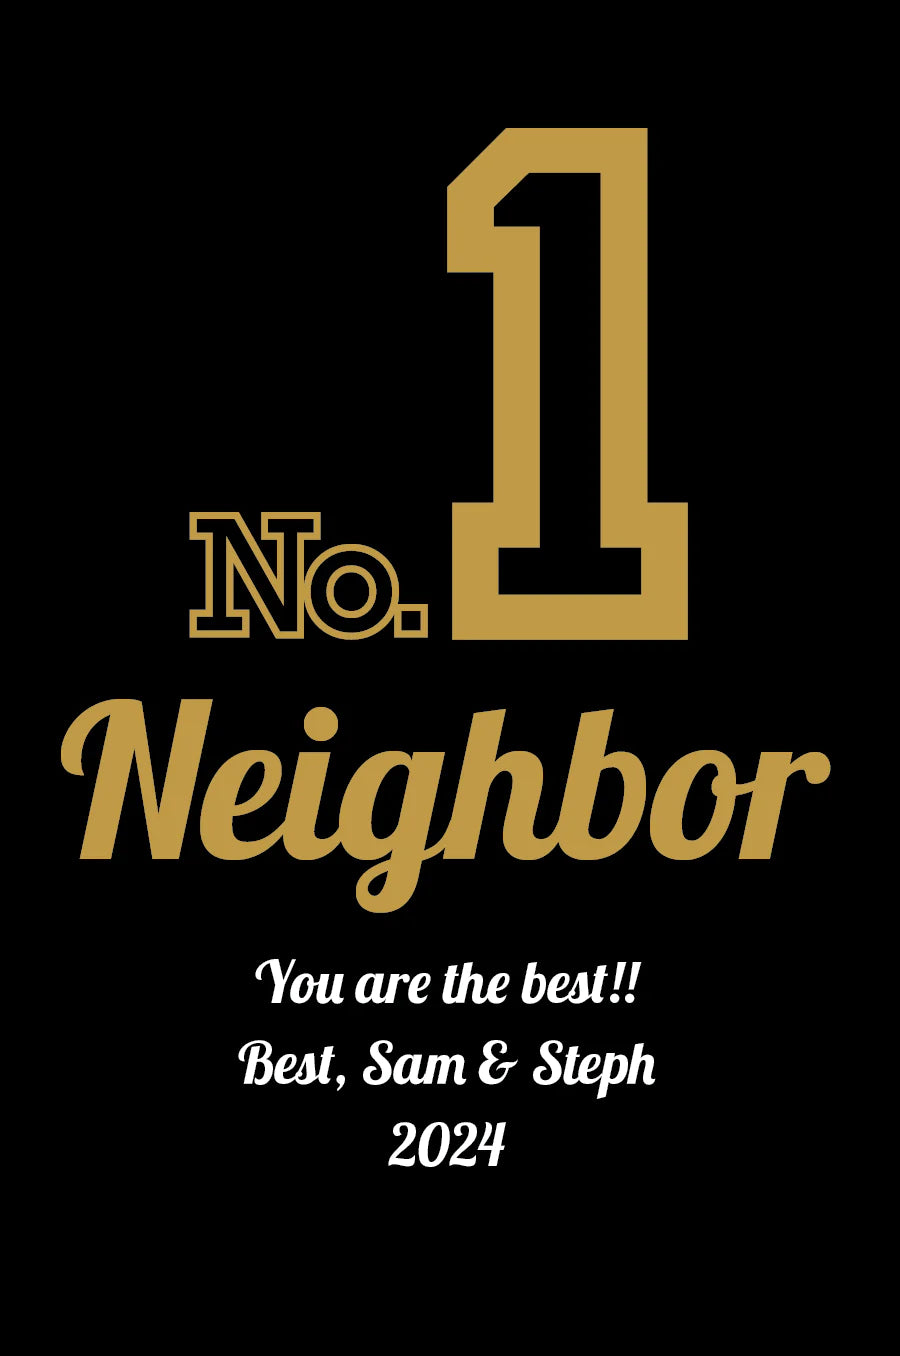 Number 1 Neighbor